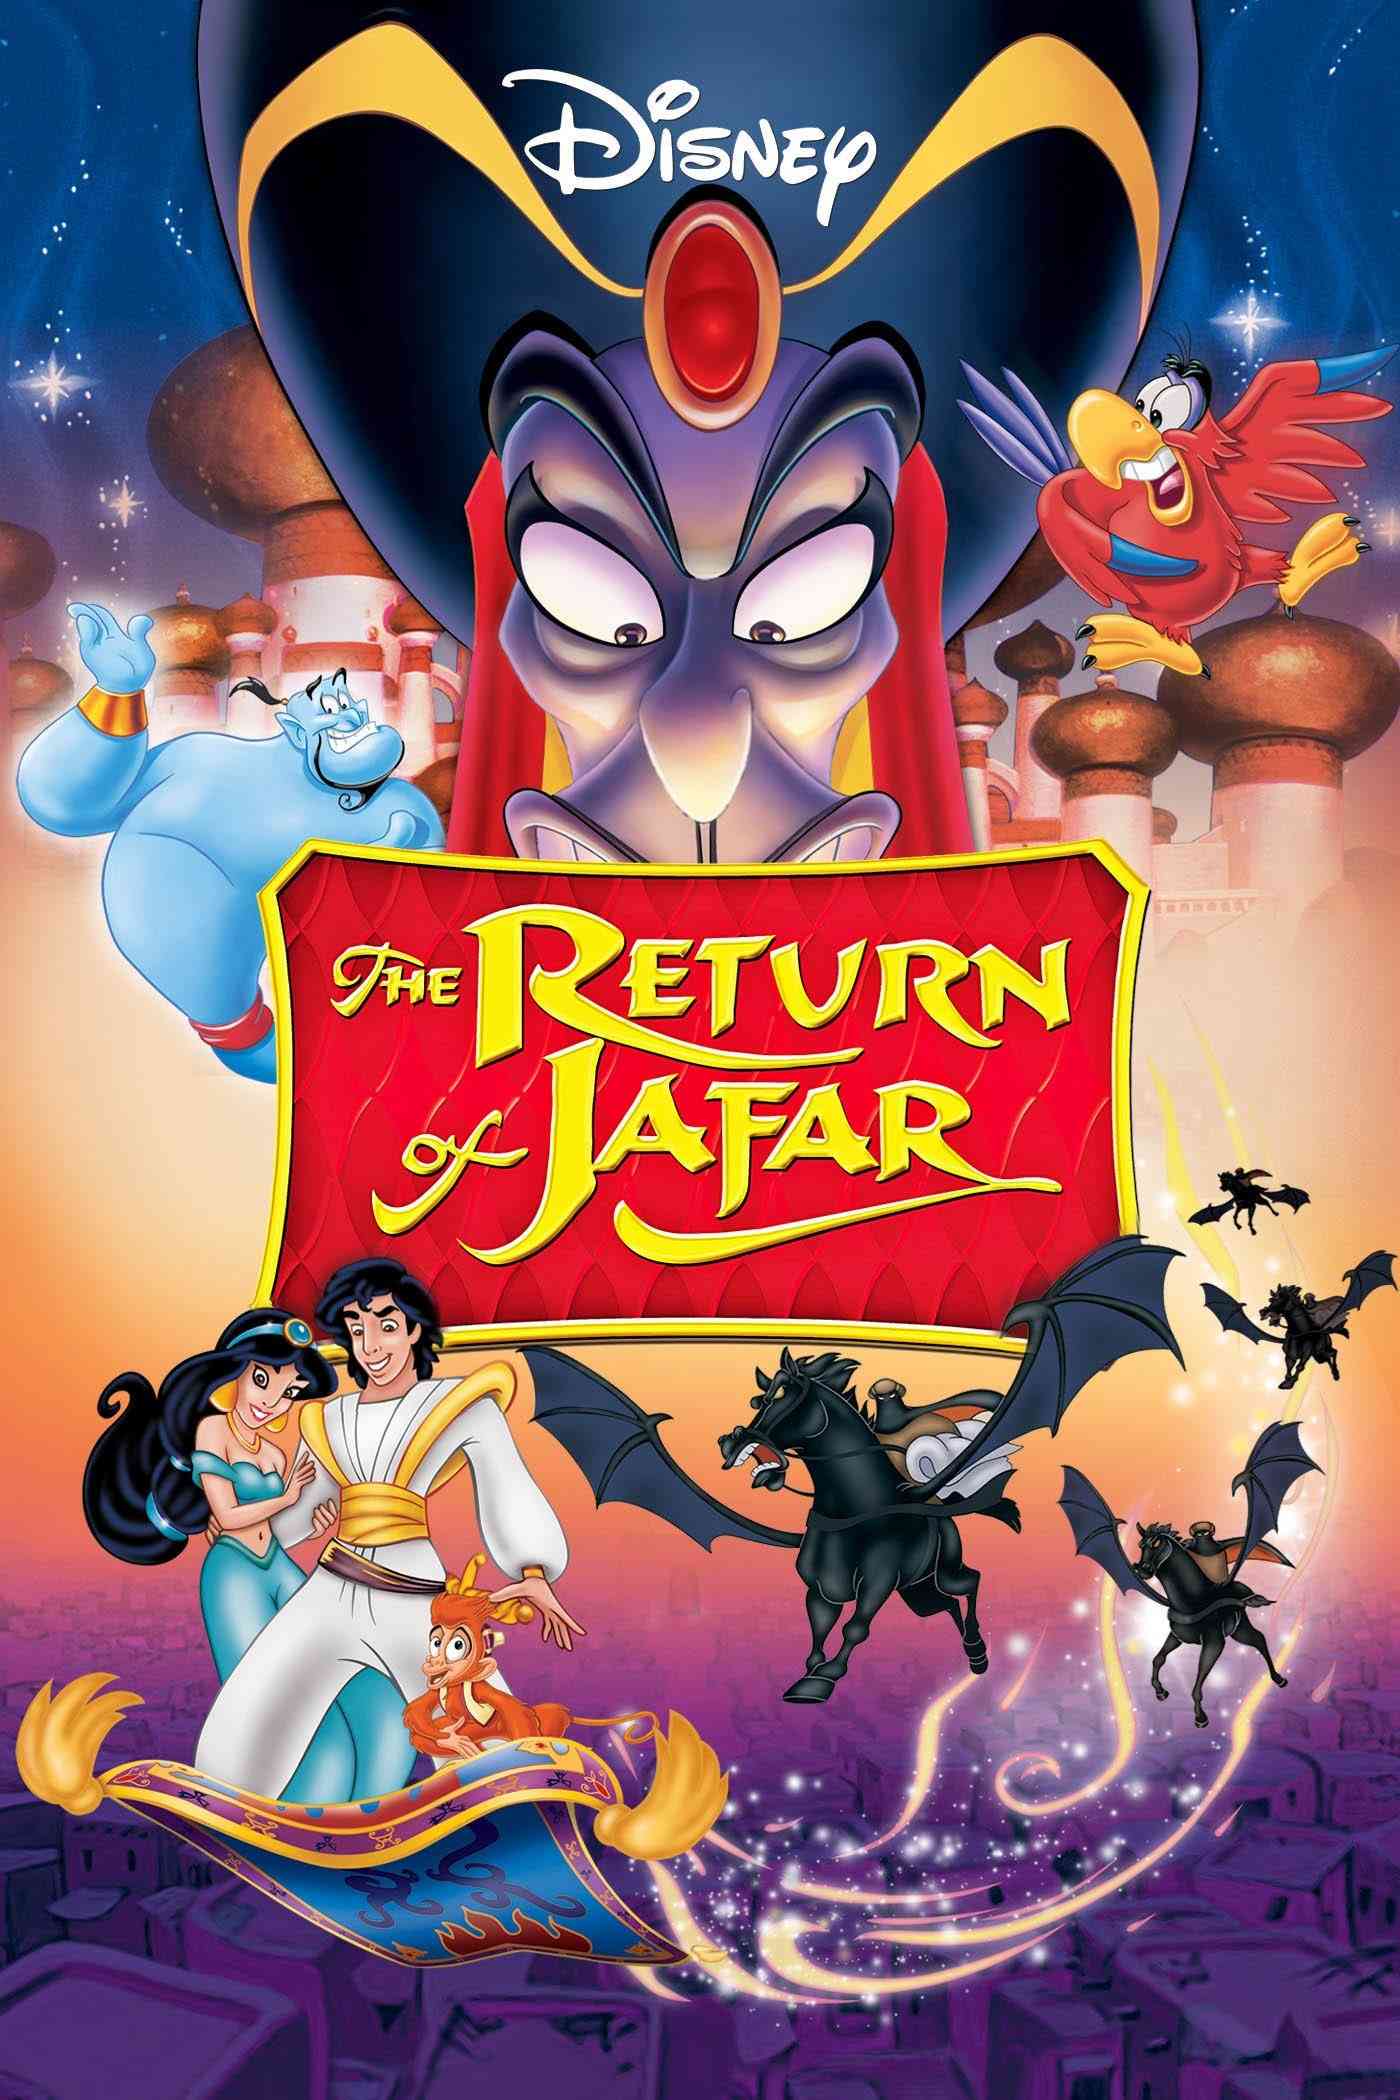 FULL MOVIE: Aladdin: The Return of Jafar (1994)